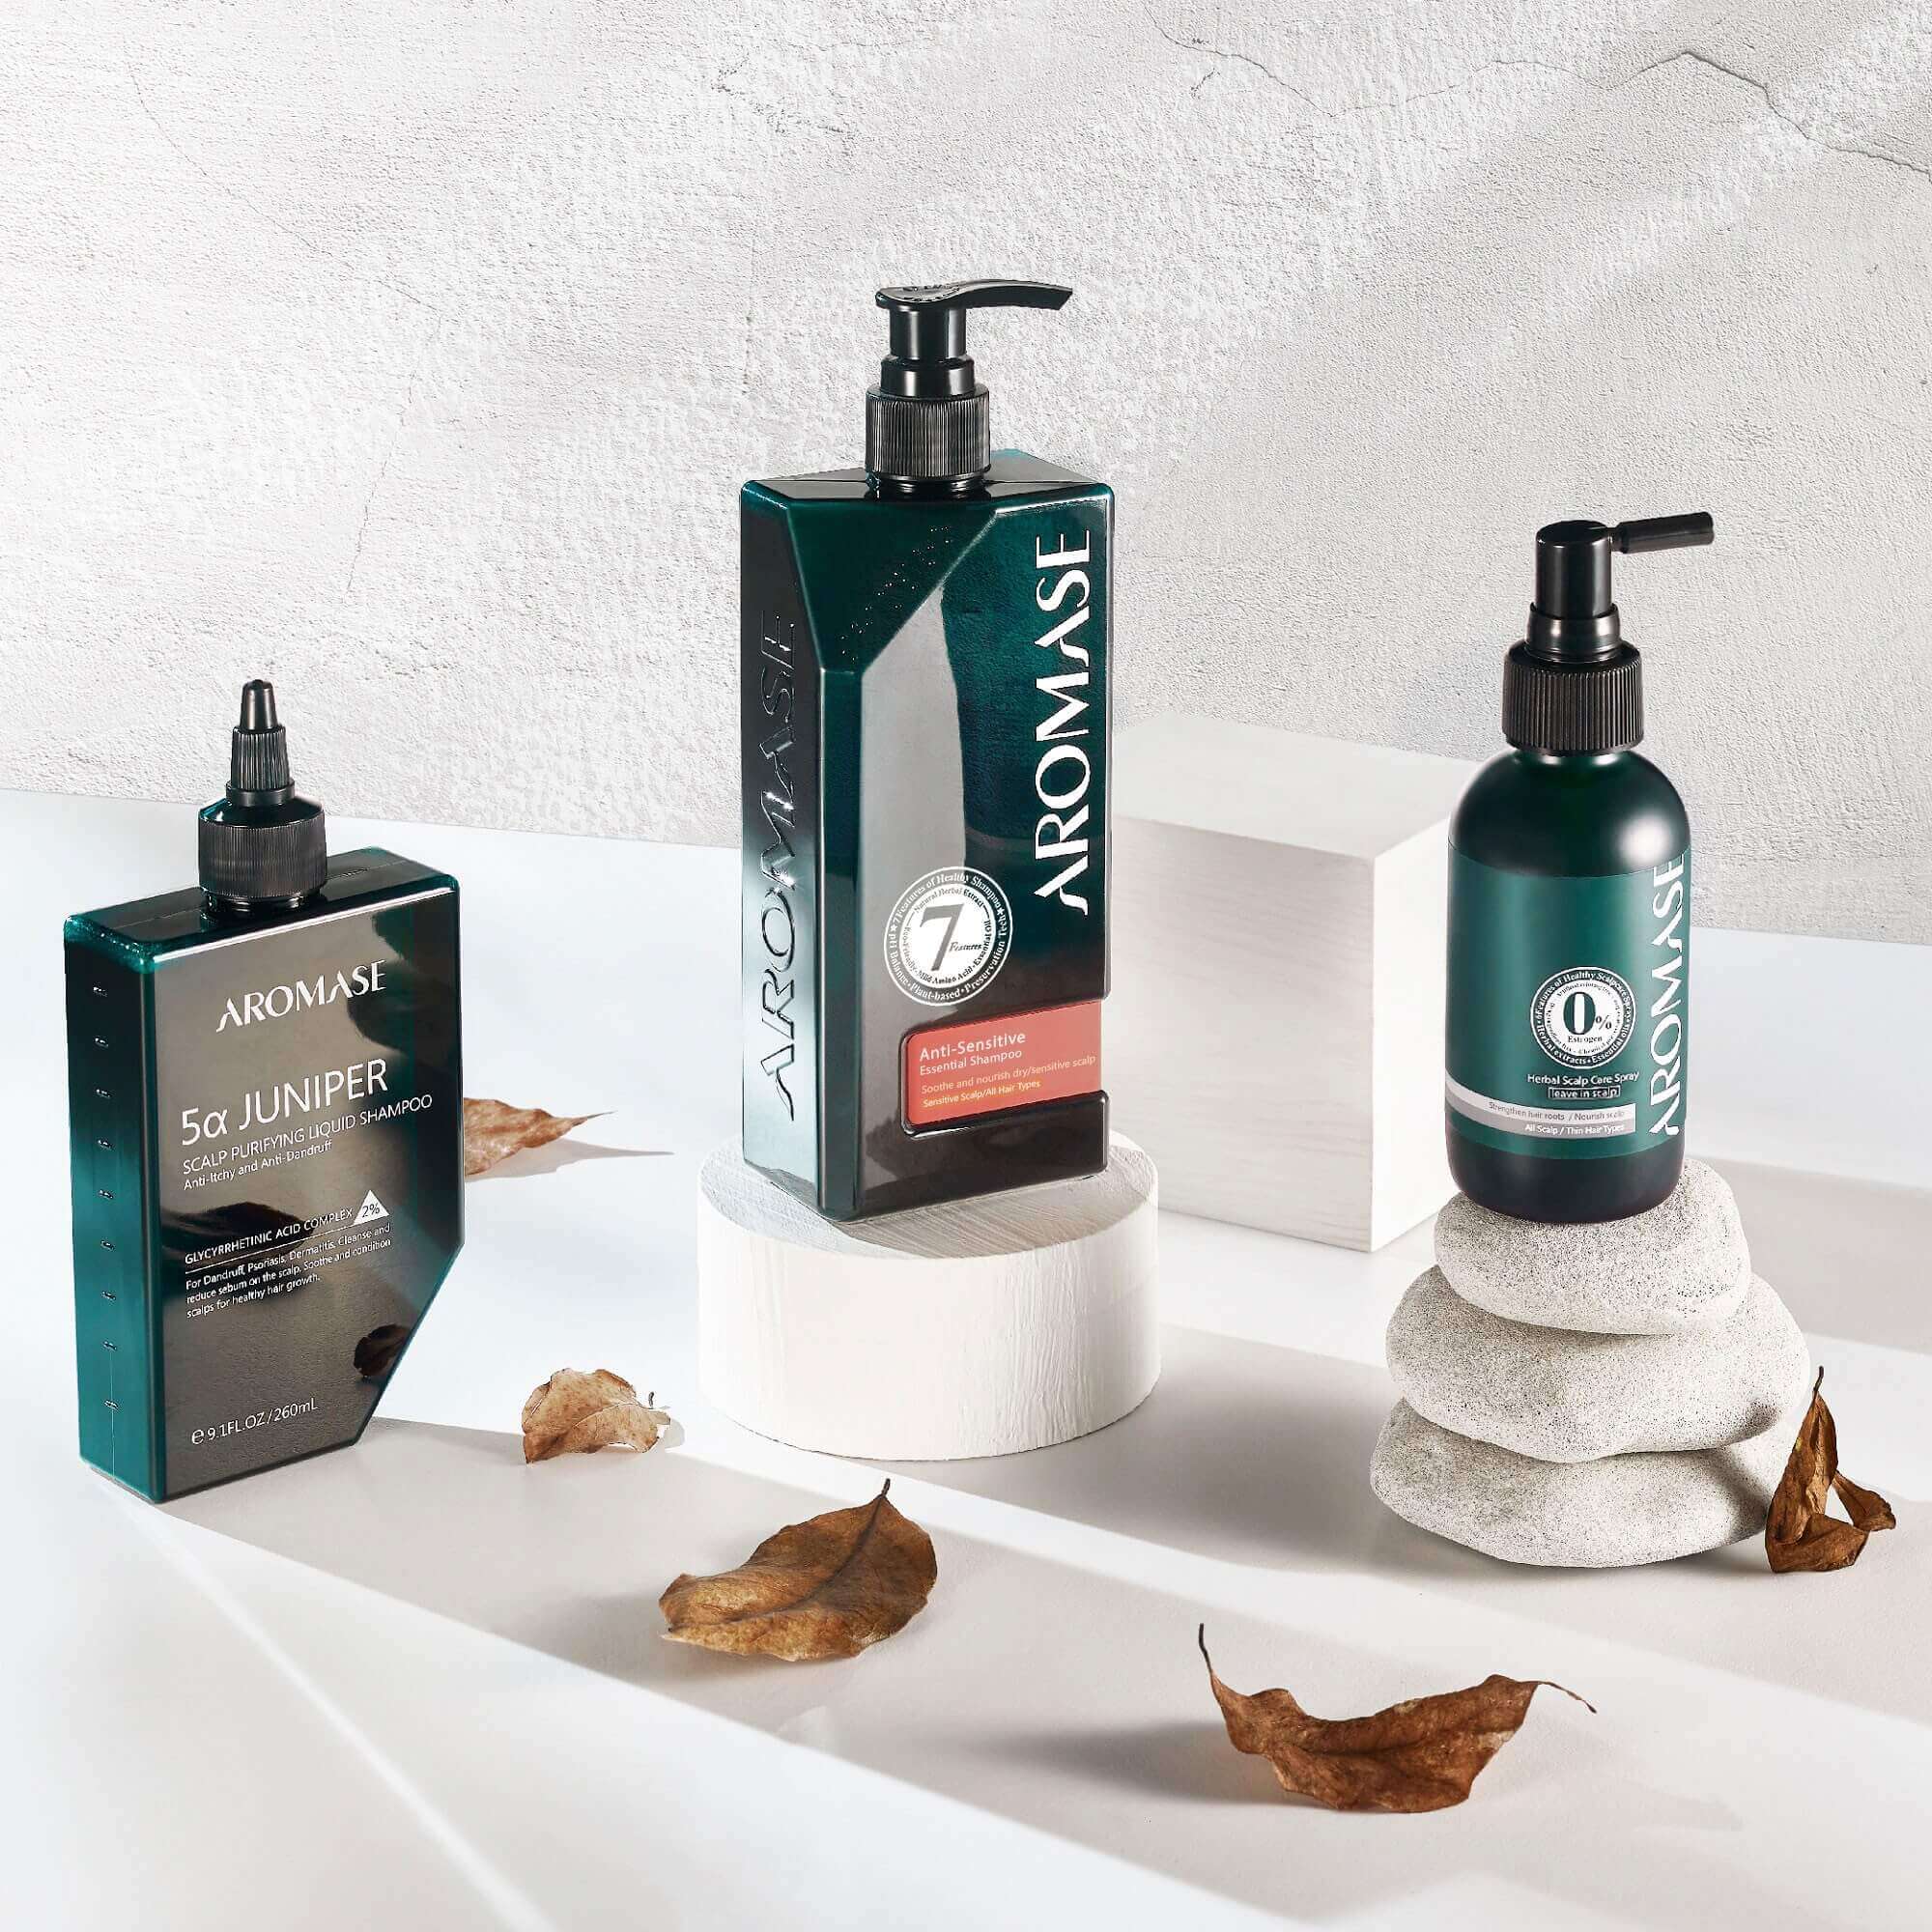 AROMASE dry sensitive shampoo for dry dandruff